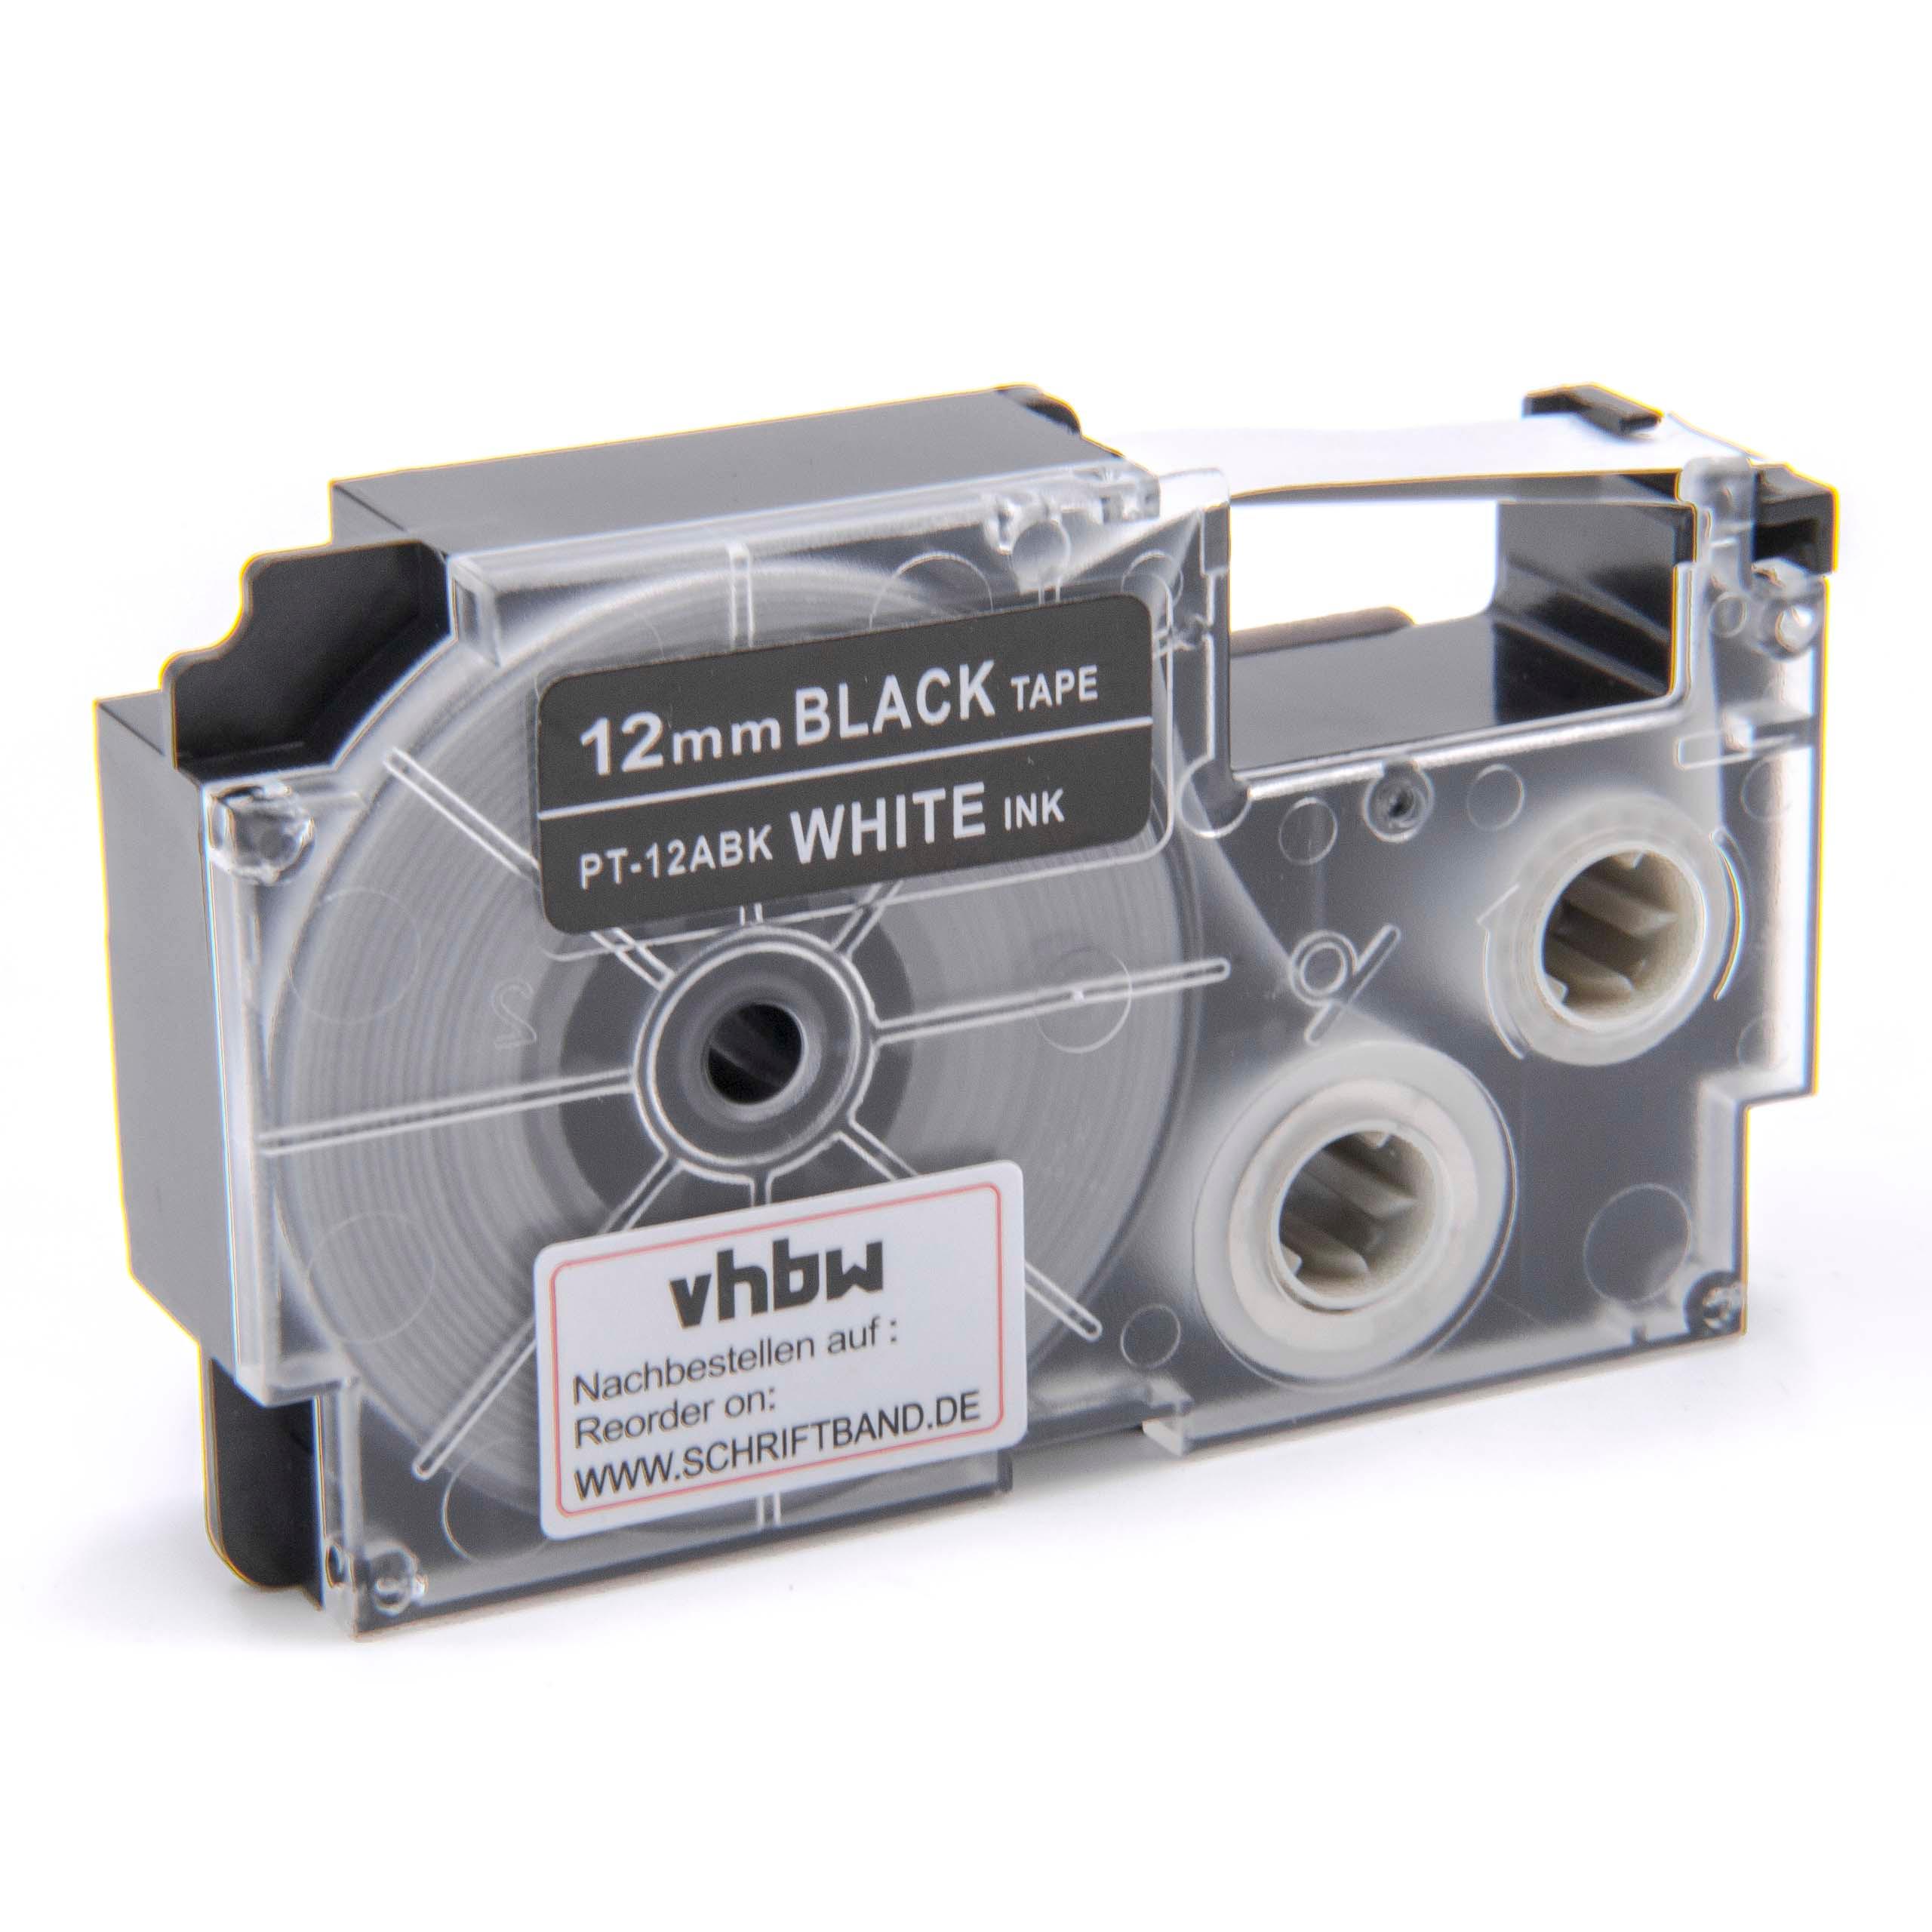 Casete cinta escritura reemplaza Casio XR-12ABK1, XR-12ABK Blanco su Negro